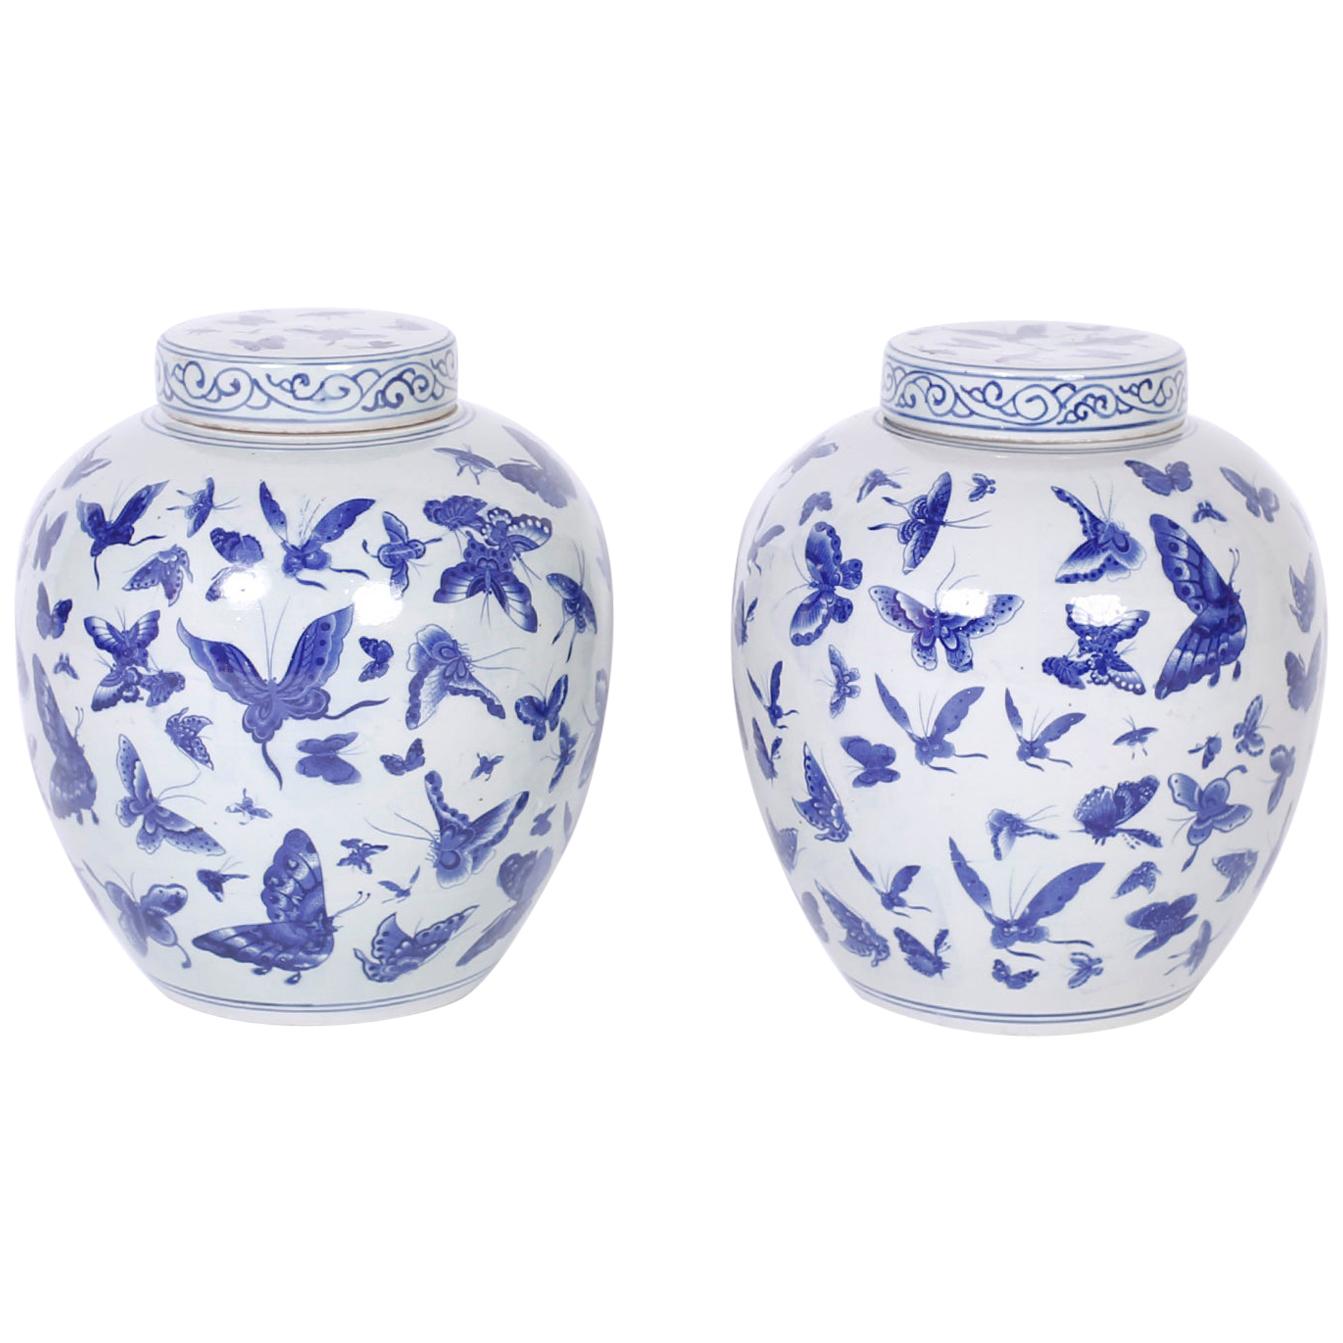 Pair of Blue and White Porcelain Ginger Jars